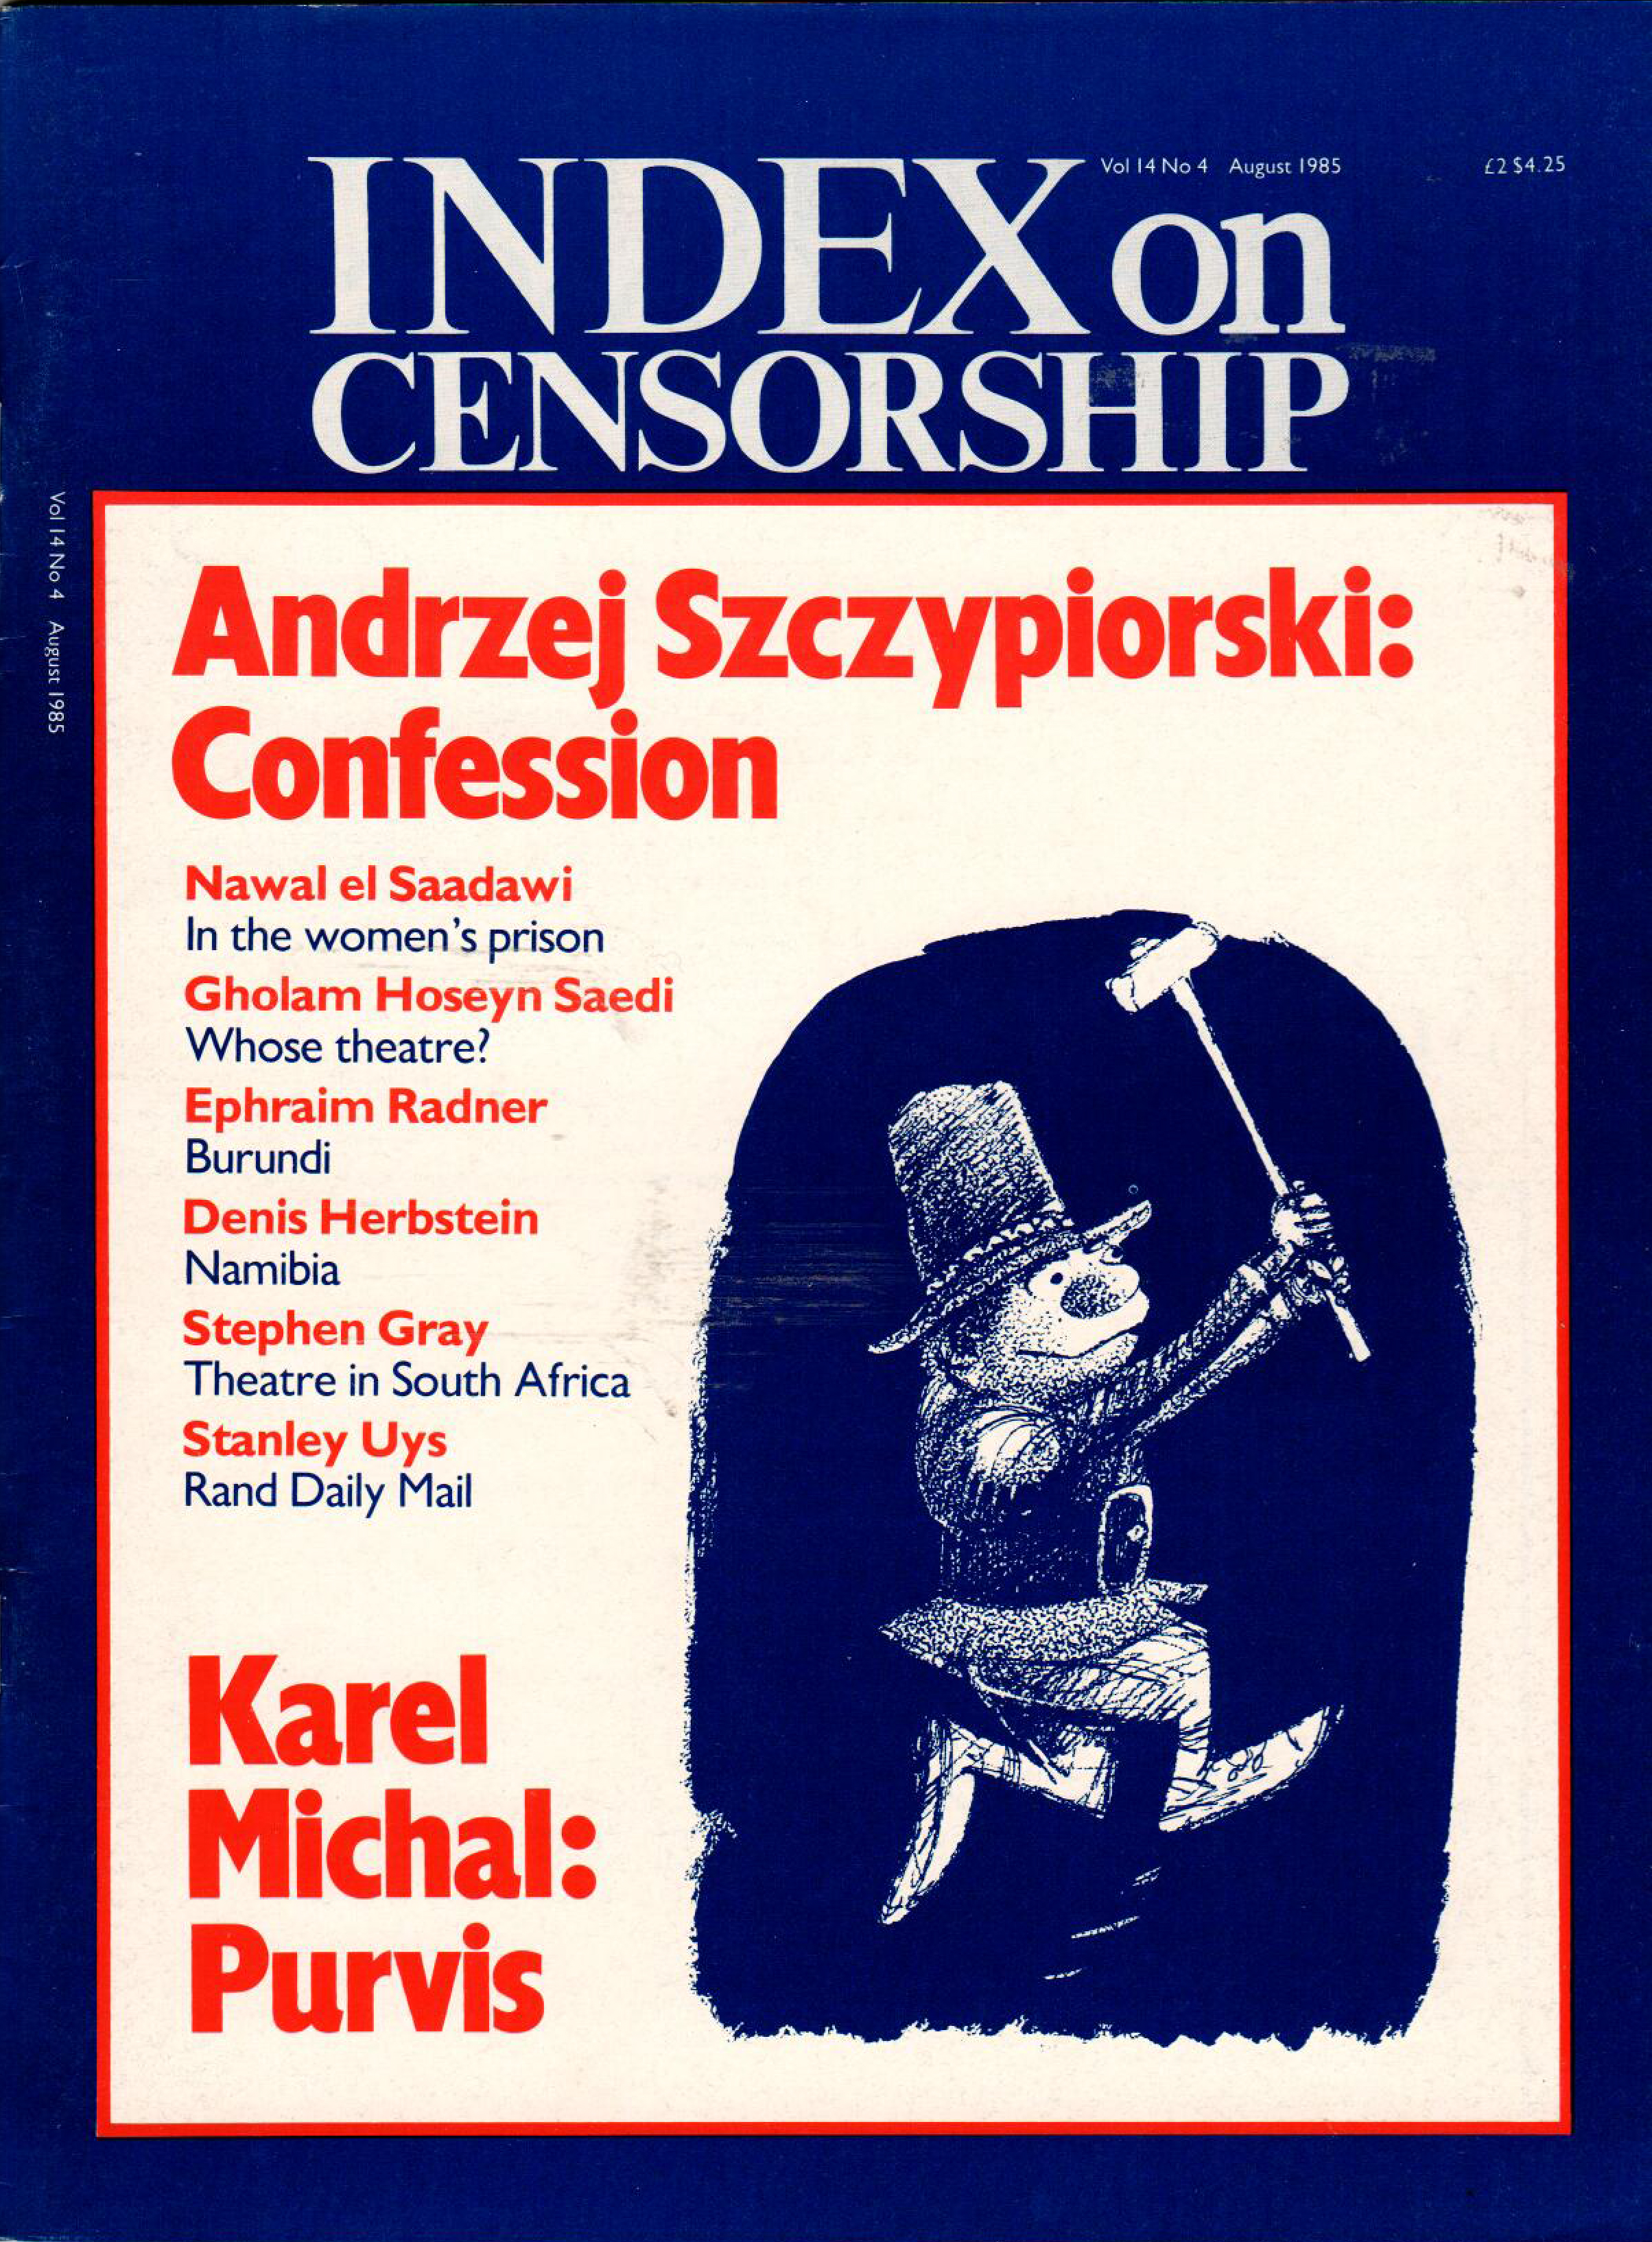 Andrzej Szczypiorski: Confession, the August 1985 issue of Index on Censorship magazine.